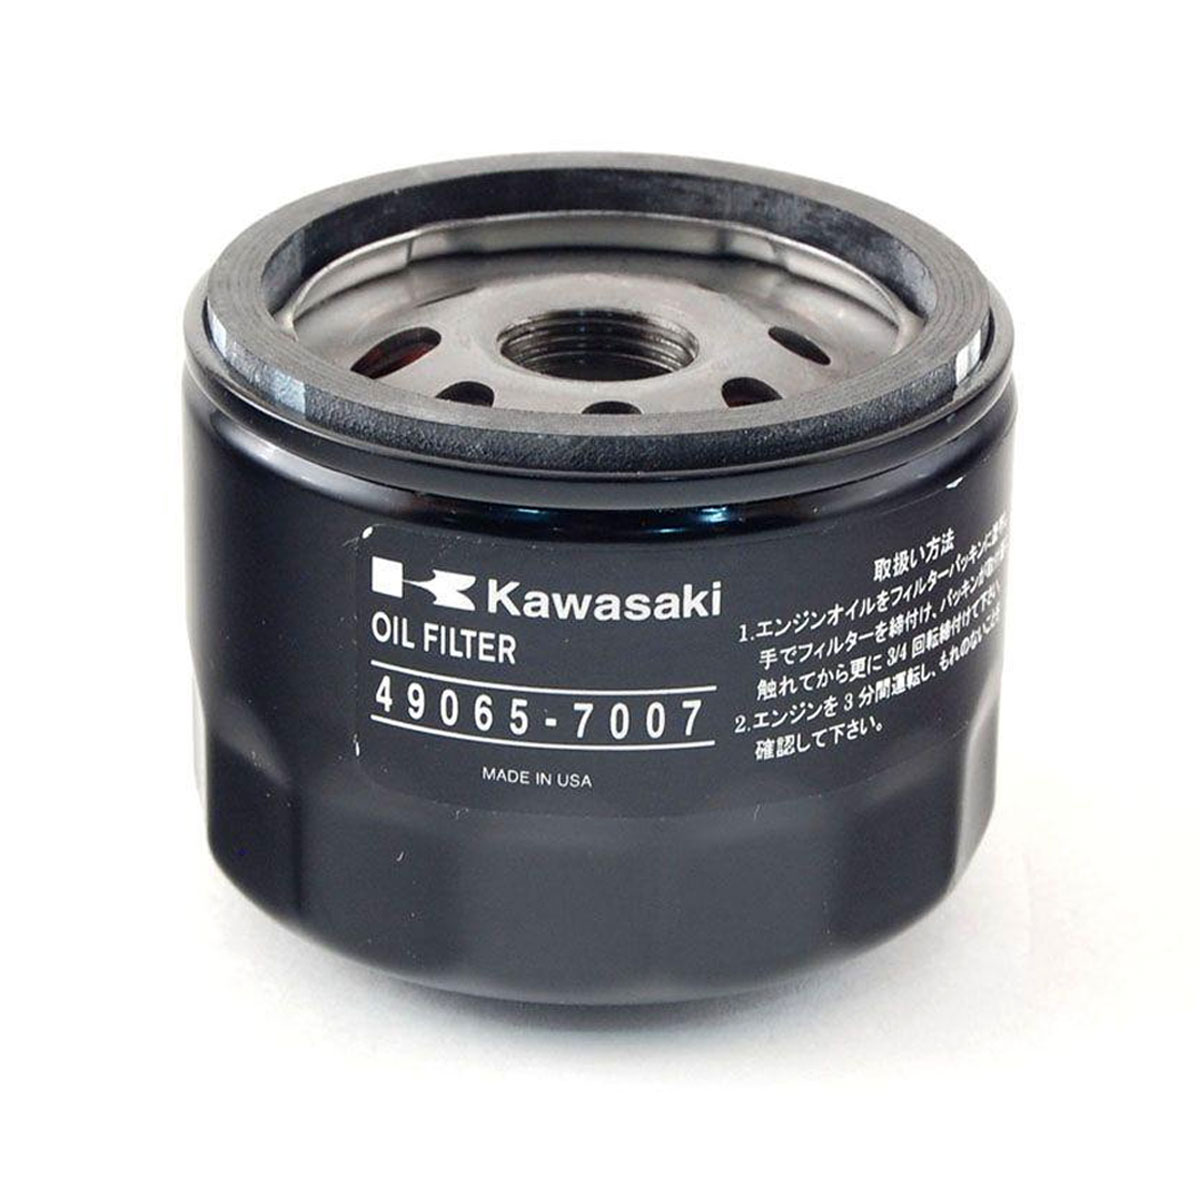 Kawasaki 49065-0721 Oil Filter, Lawn Equipment, Snow Removal Equipment, Construction Equipment, Toronto Ontario